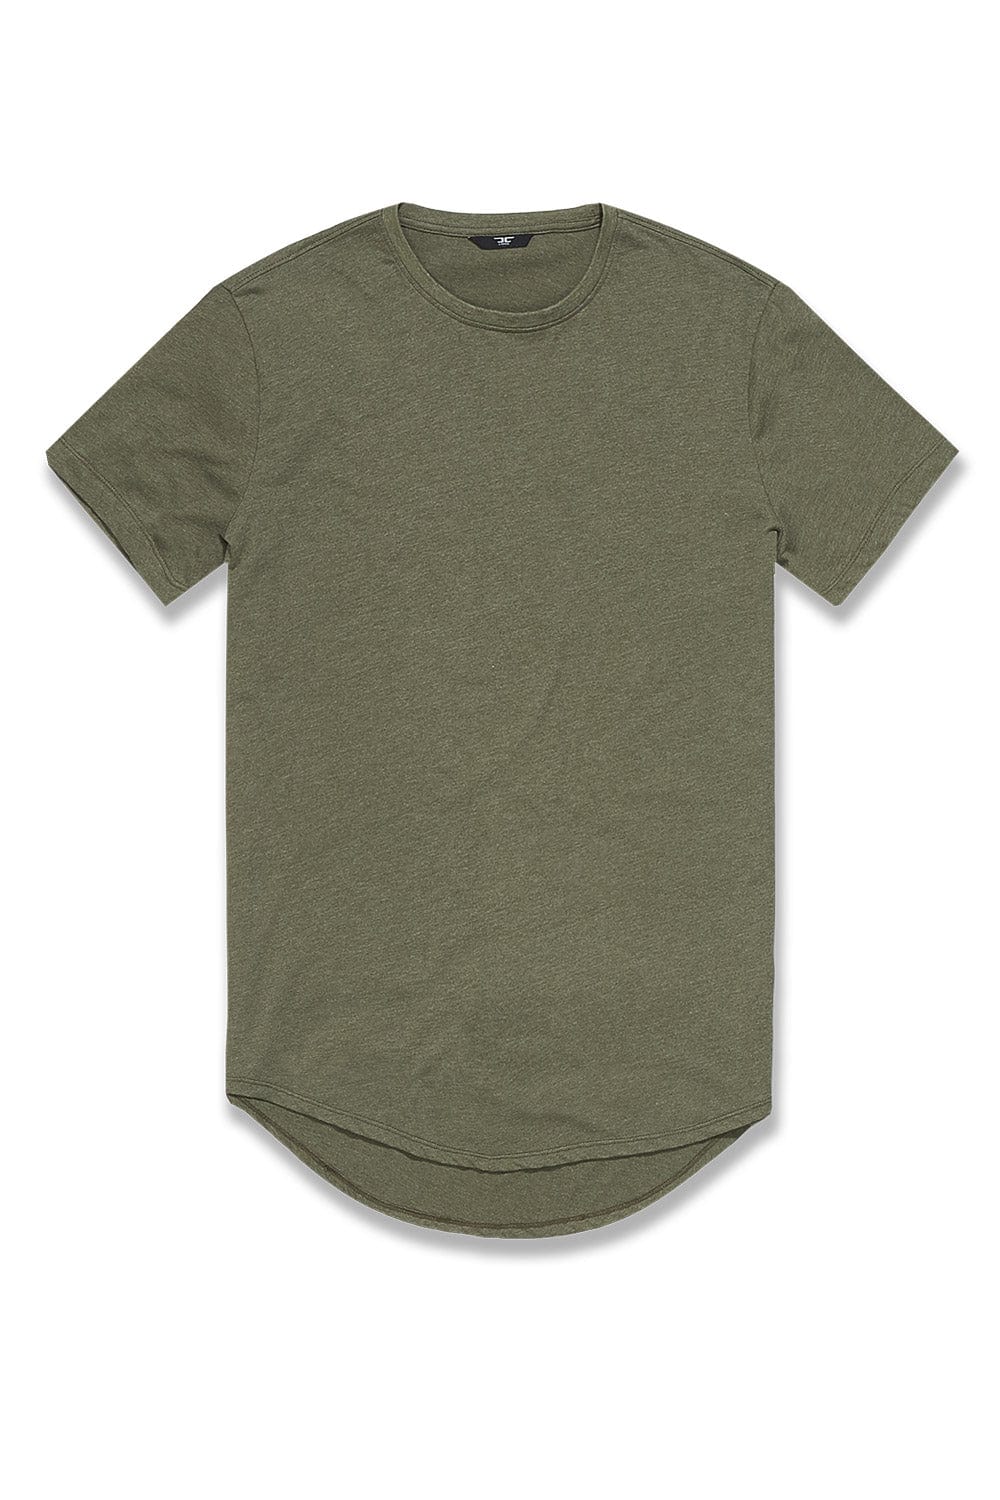 JC Big Men Big Men's Scallop T-Shirt (Name Your Price) Stone Moss / 4XL